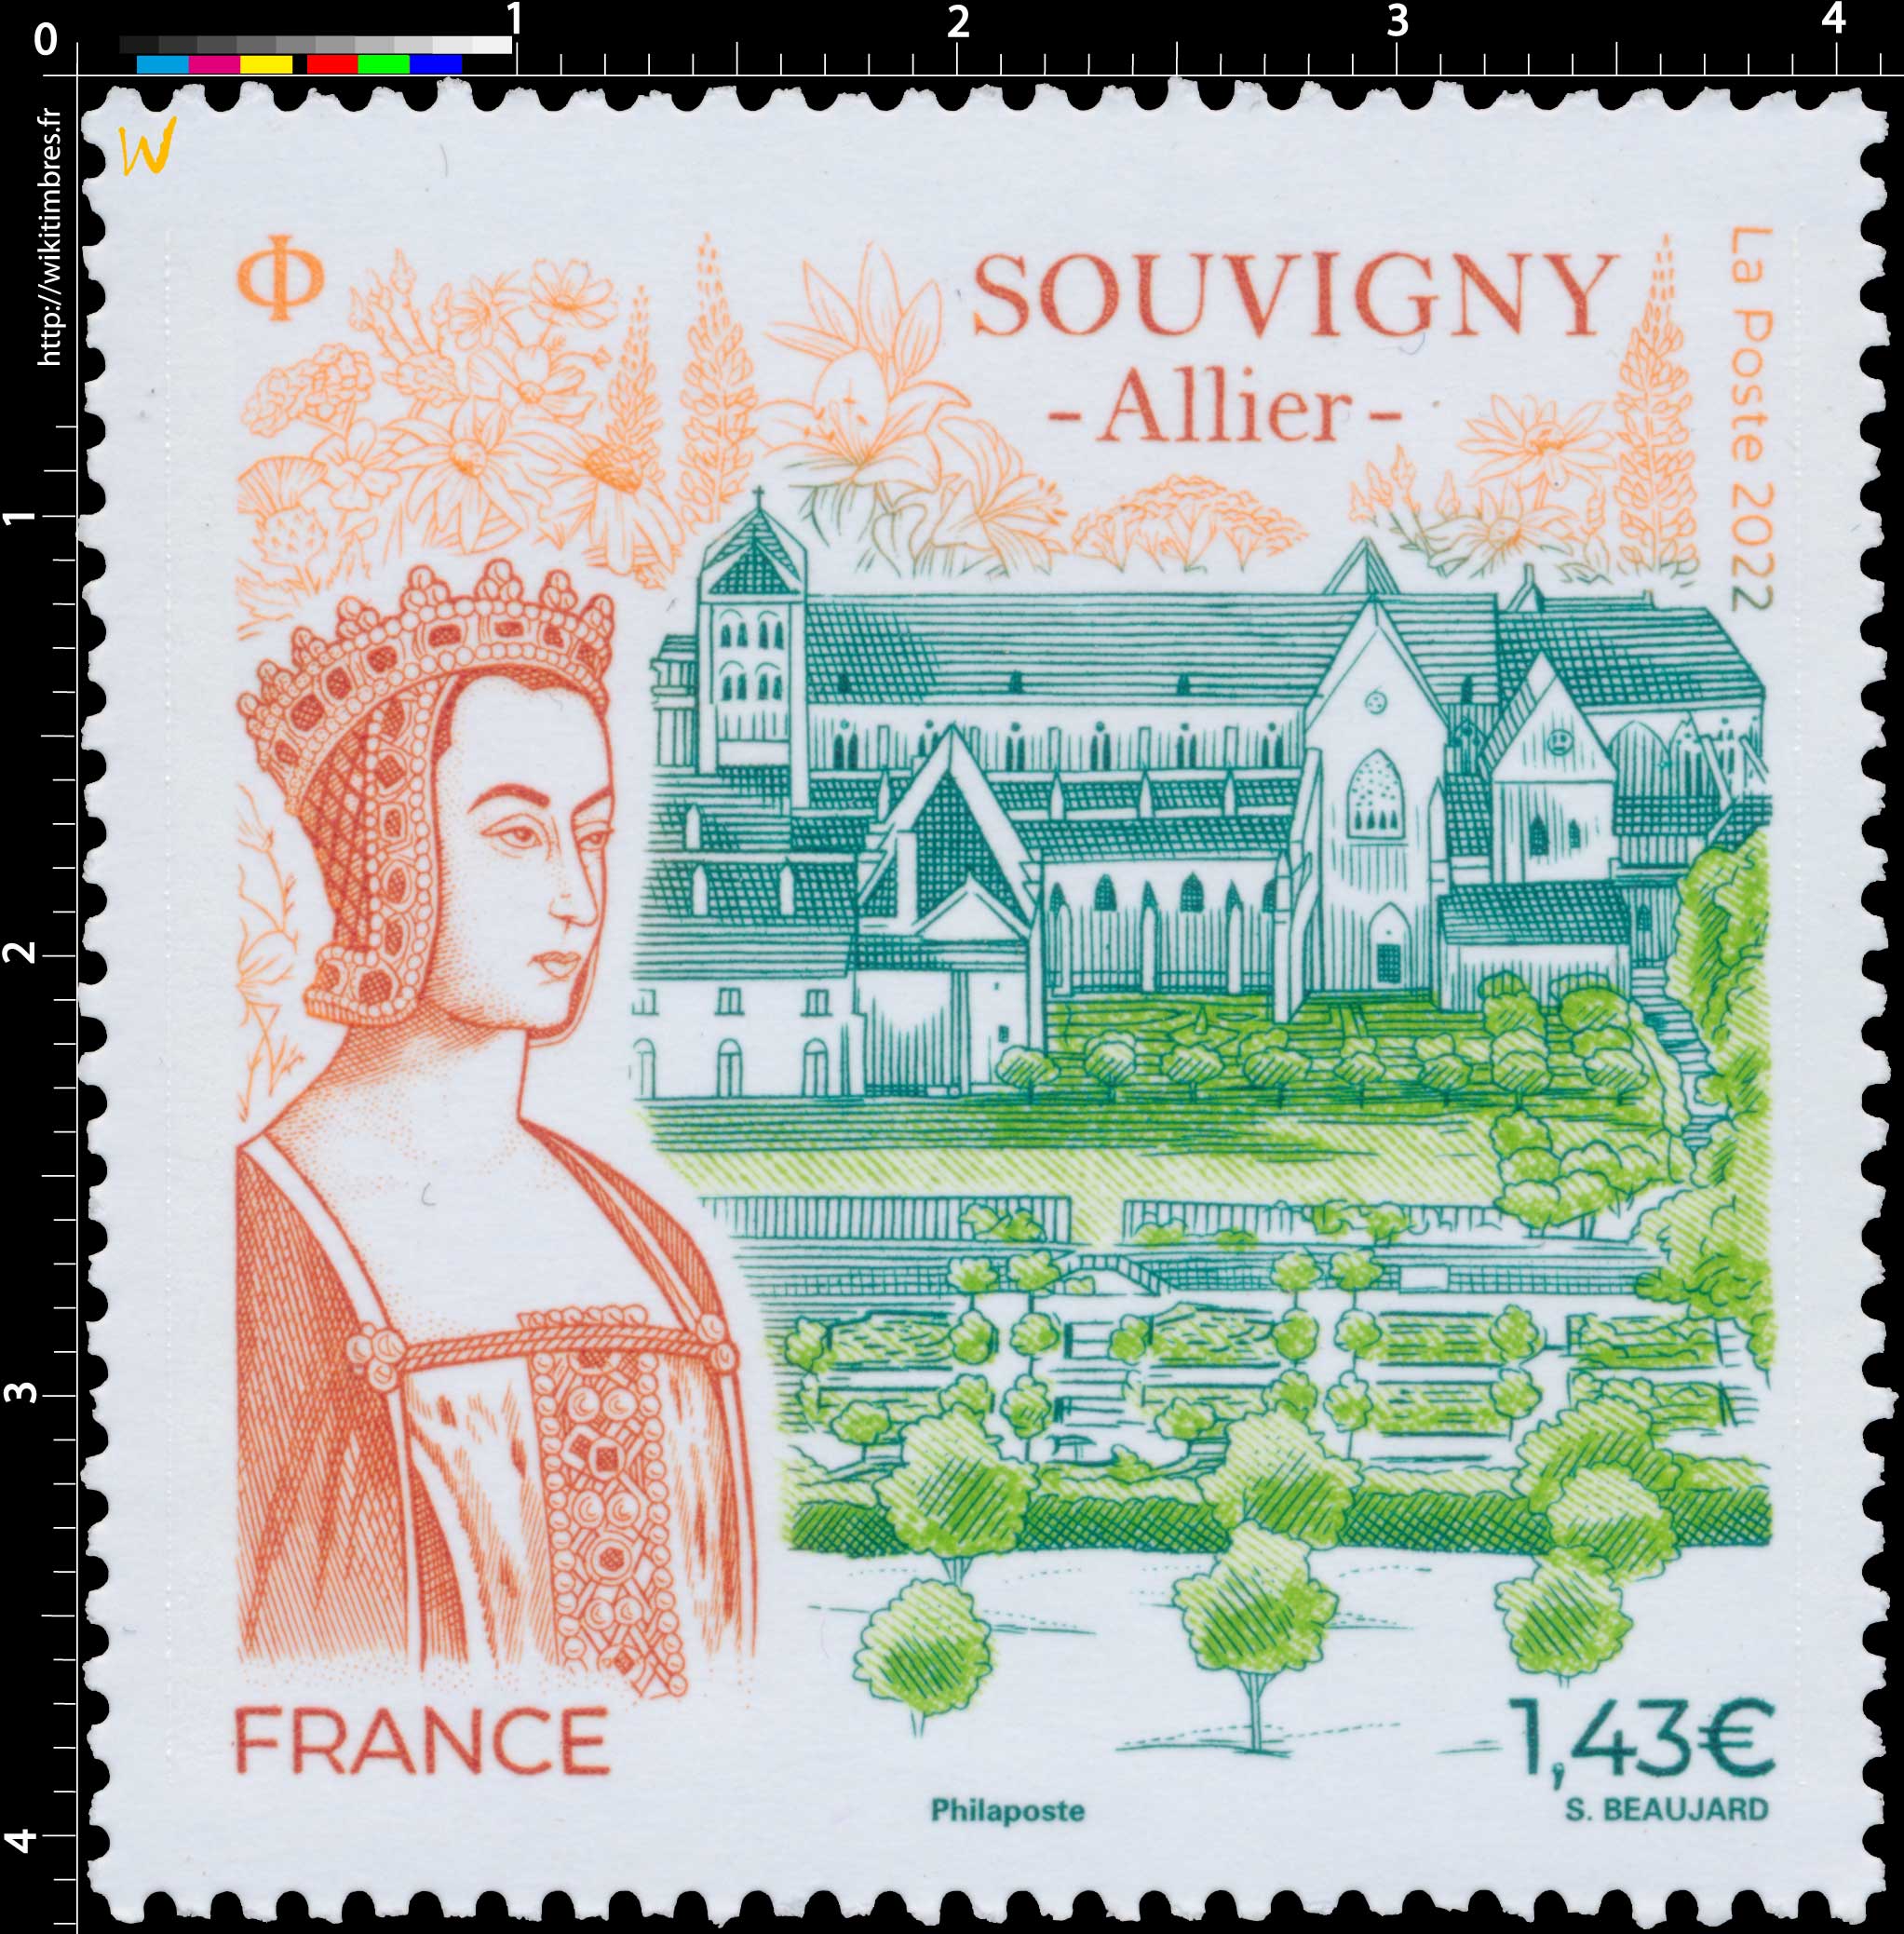 2022 Souvigny  -  Allier